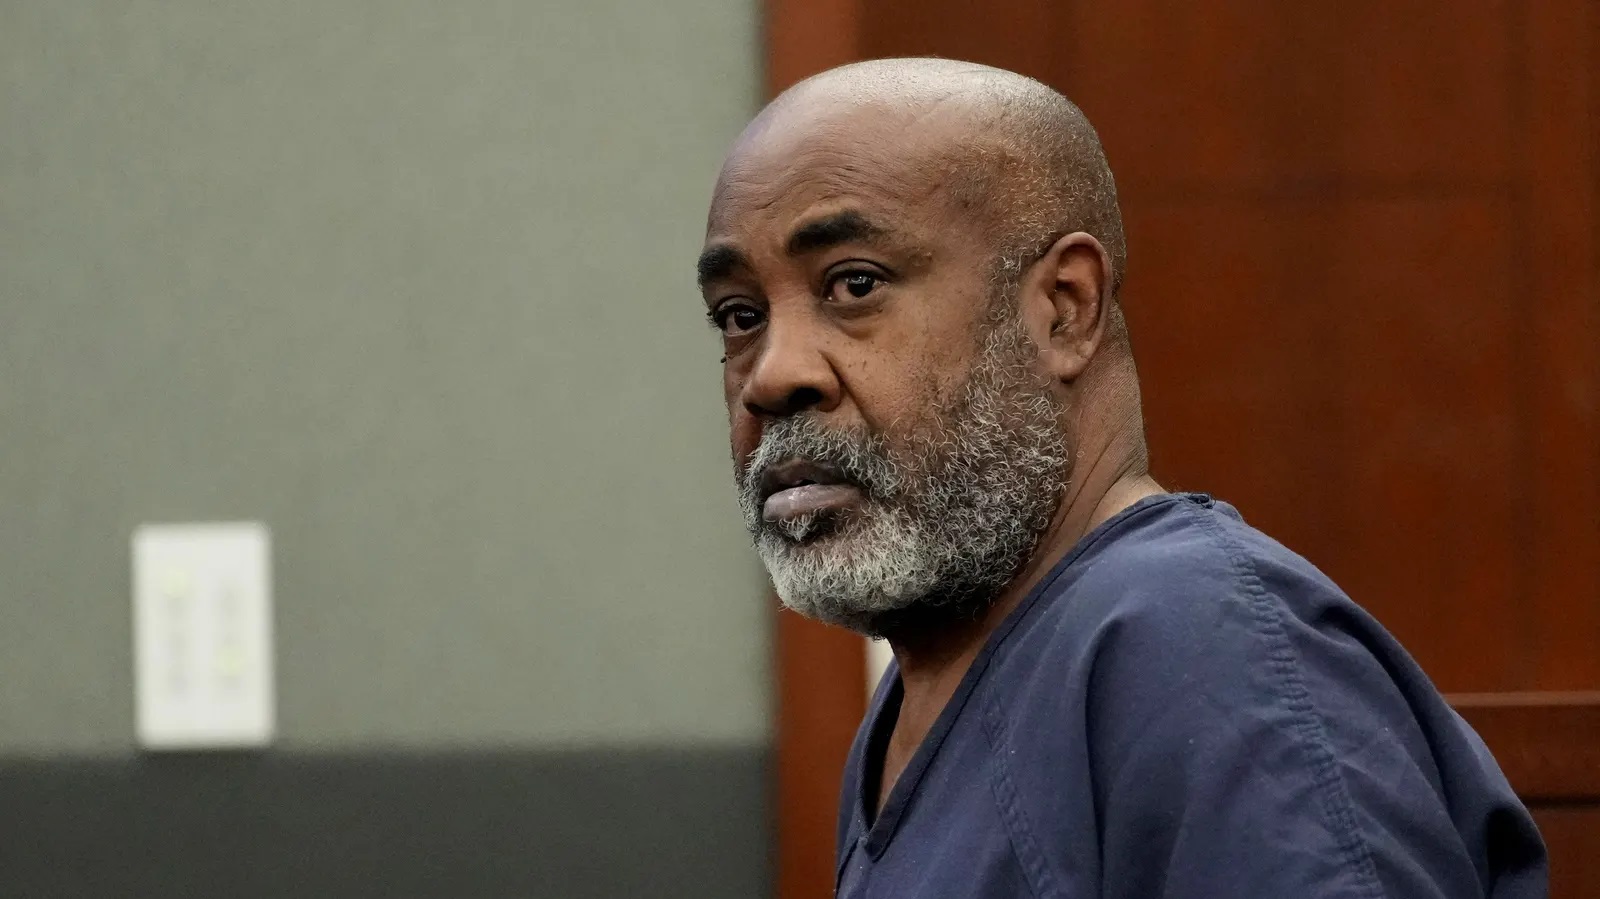 Tupac Shakur Murder Suspect Keefe D Granted Bail In Vegas Criminal Case